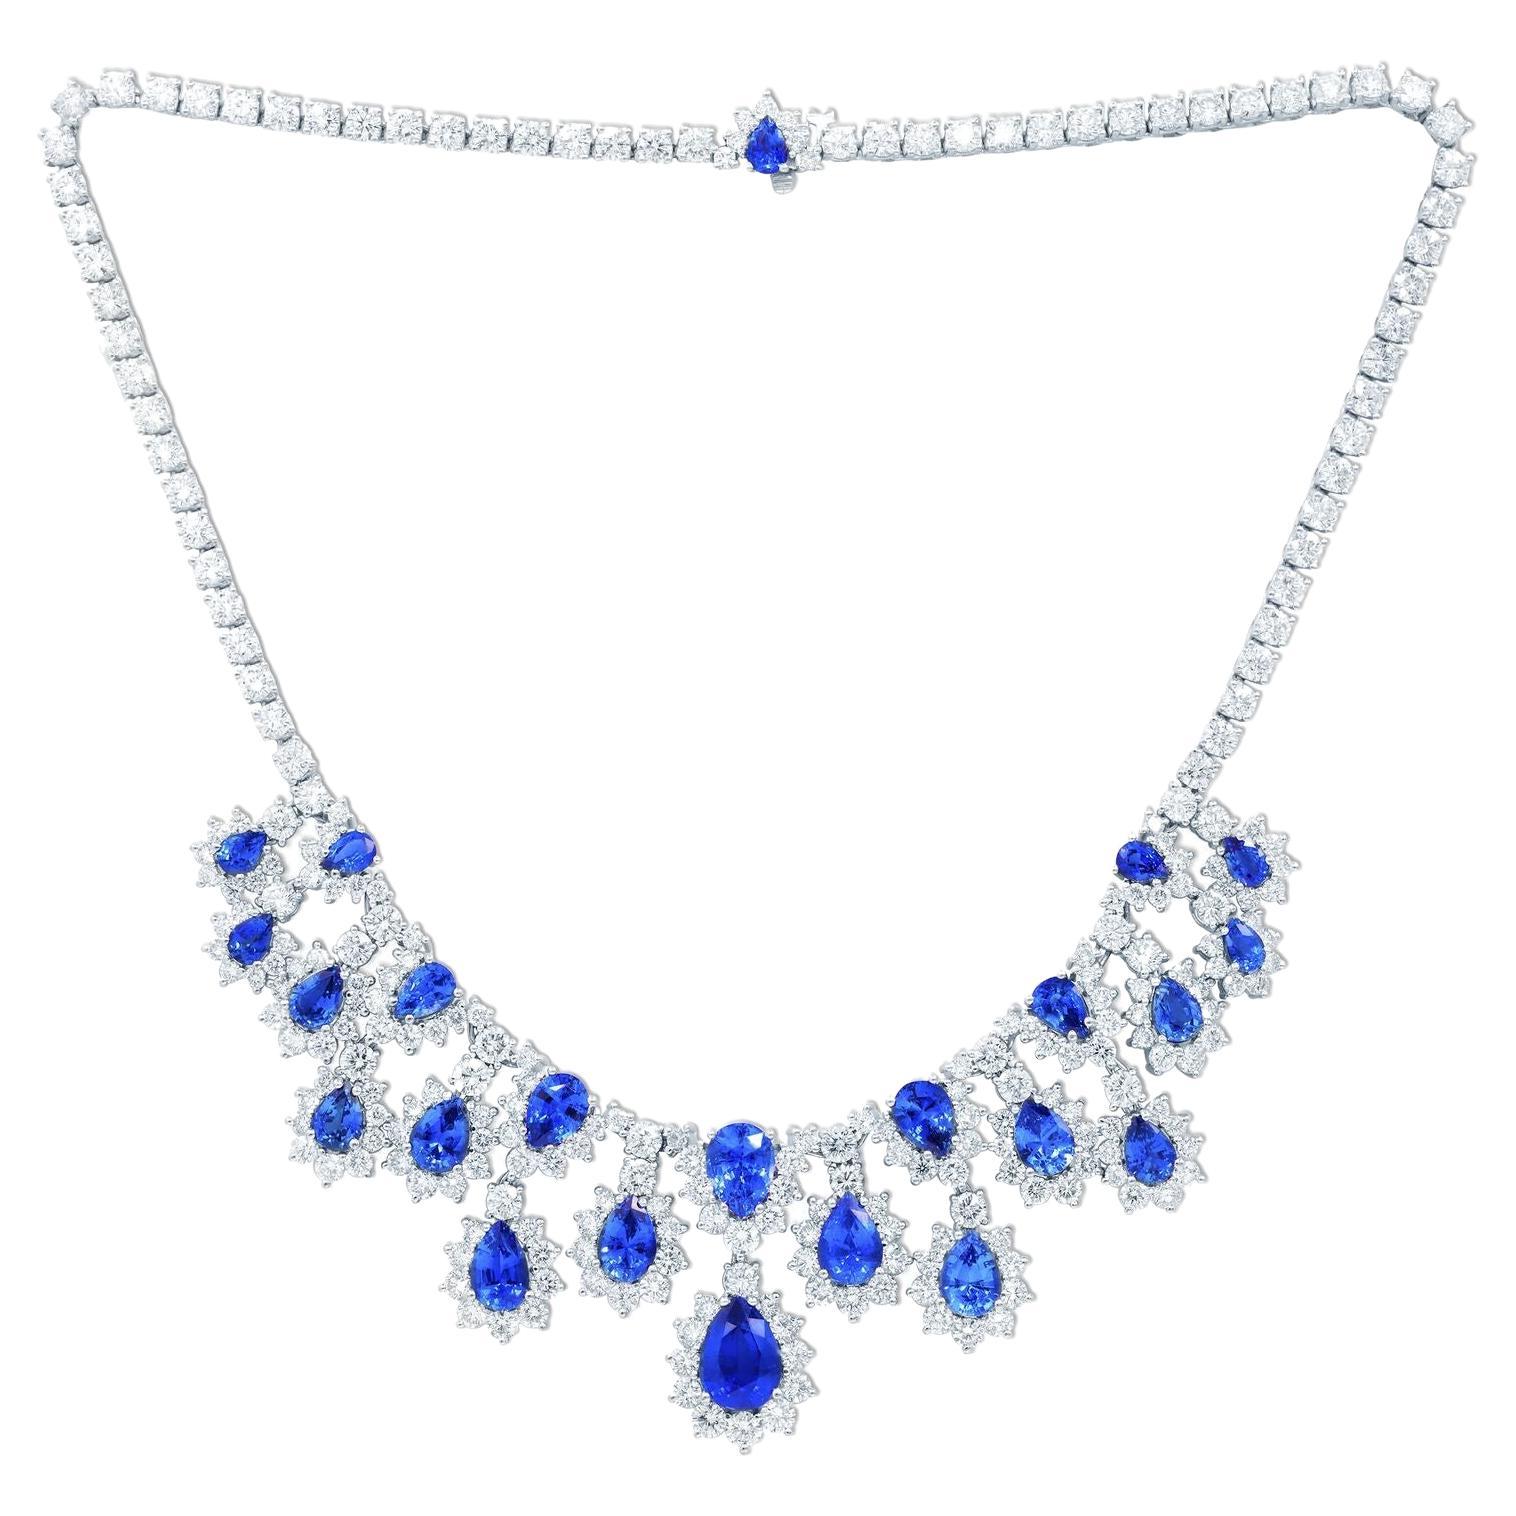 Diana M. 27.36 Carat Pear Cut Sapphire and Diamond Necklace